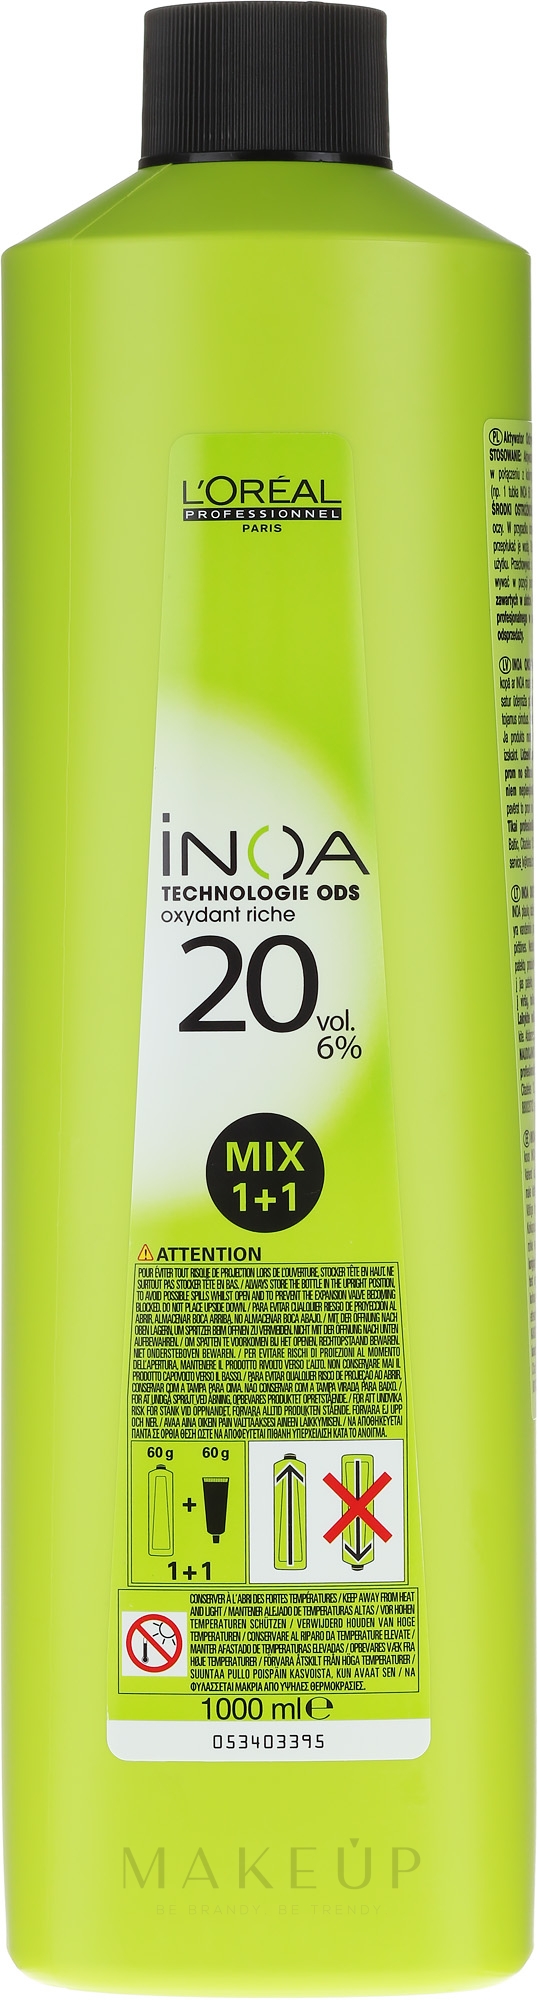 Oxidationsmittel 6% - L'oreal Professionnel Inoa Oxydant 6% 20 vol. Mix 1+1 — Foto 1000 ml